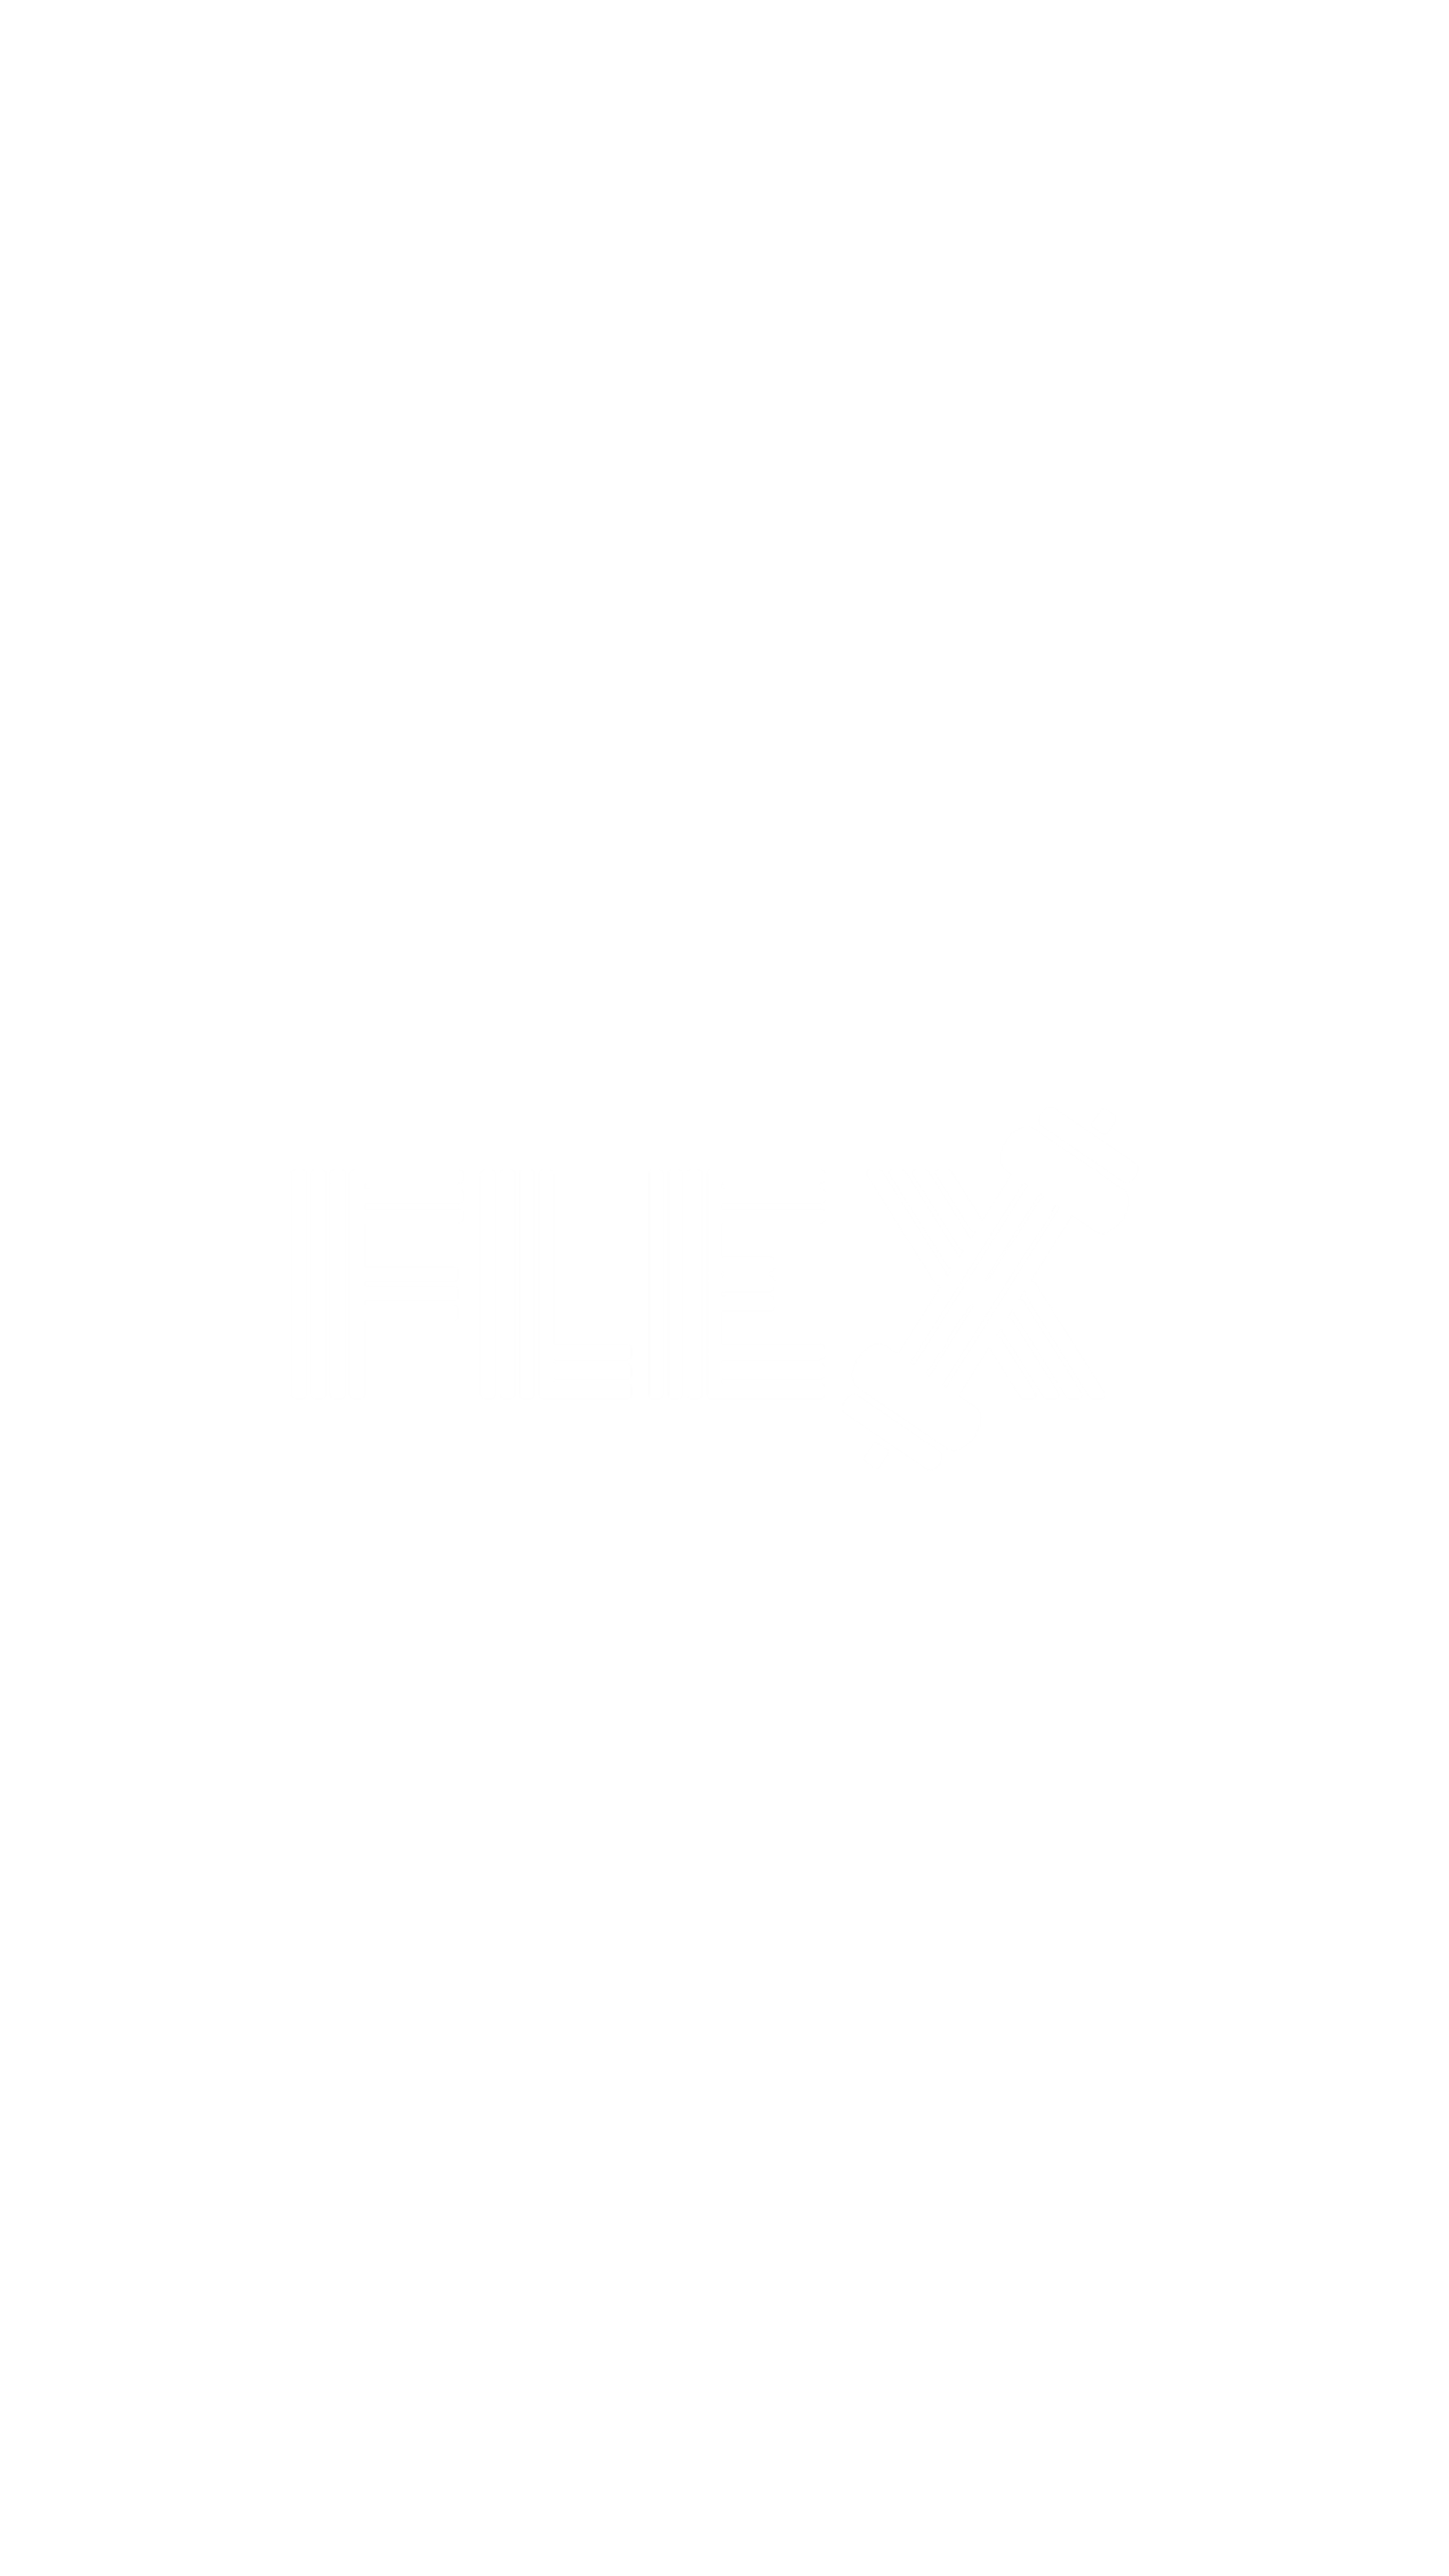 FLEX STUDIO